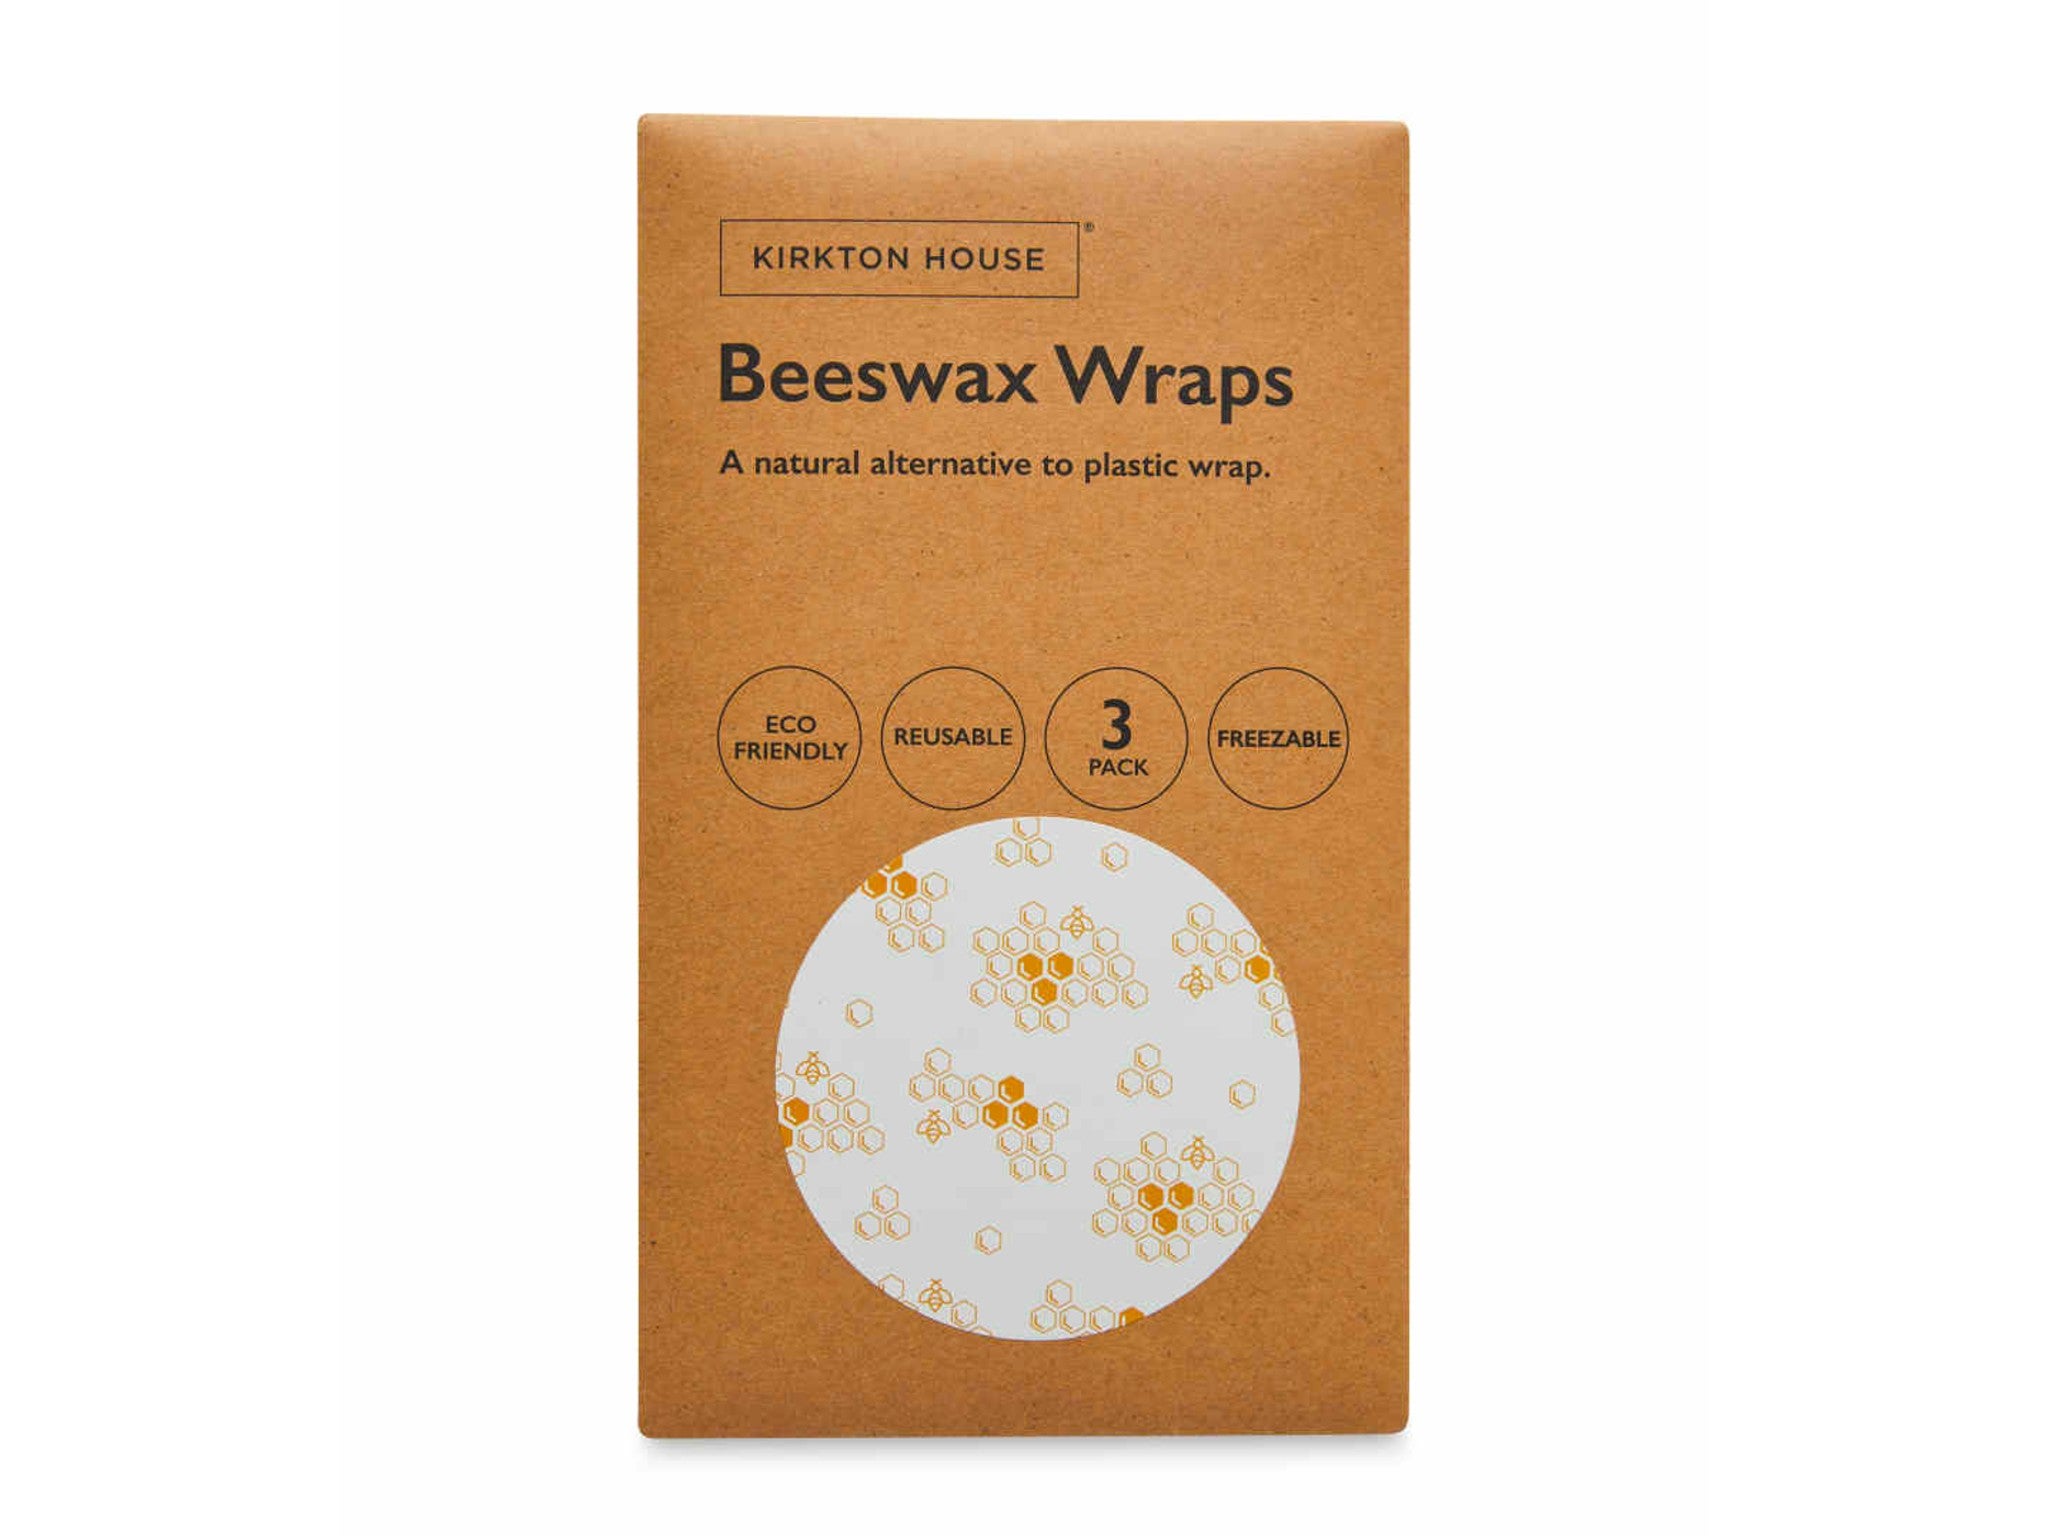 Honeycomb Pattern Beeswax Wraps indybest.jpg